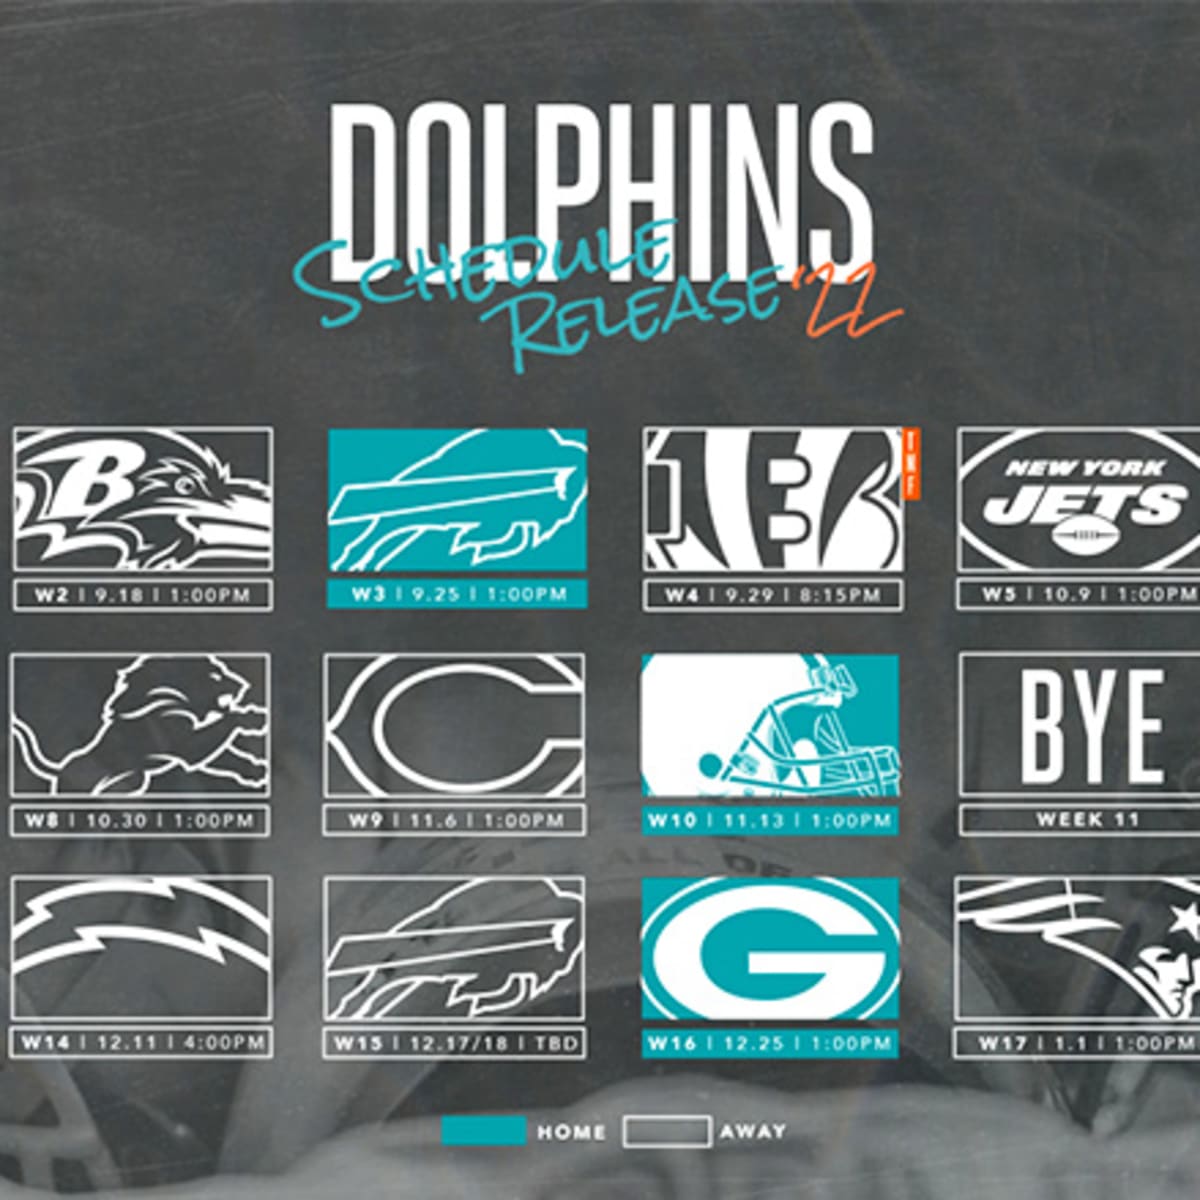 2023 Miami Dolphins Schedule